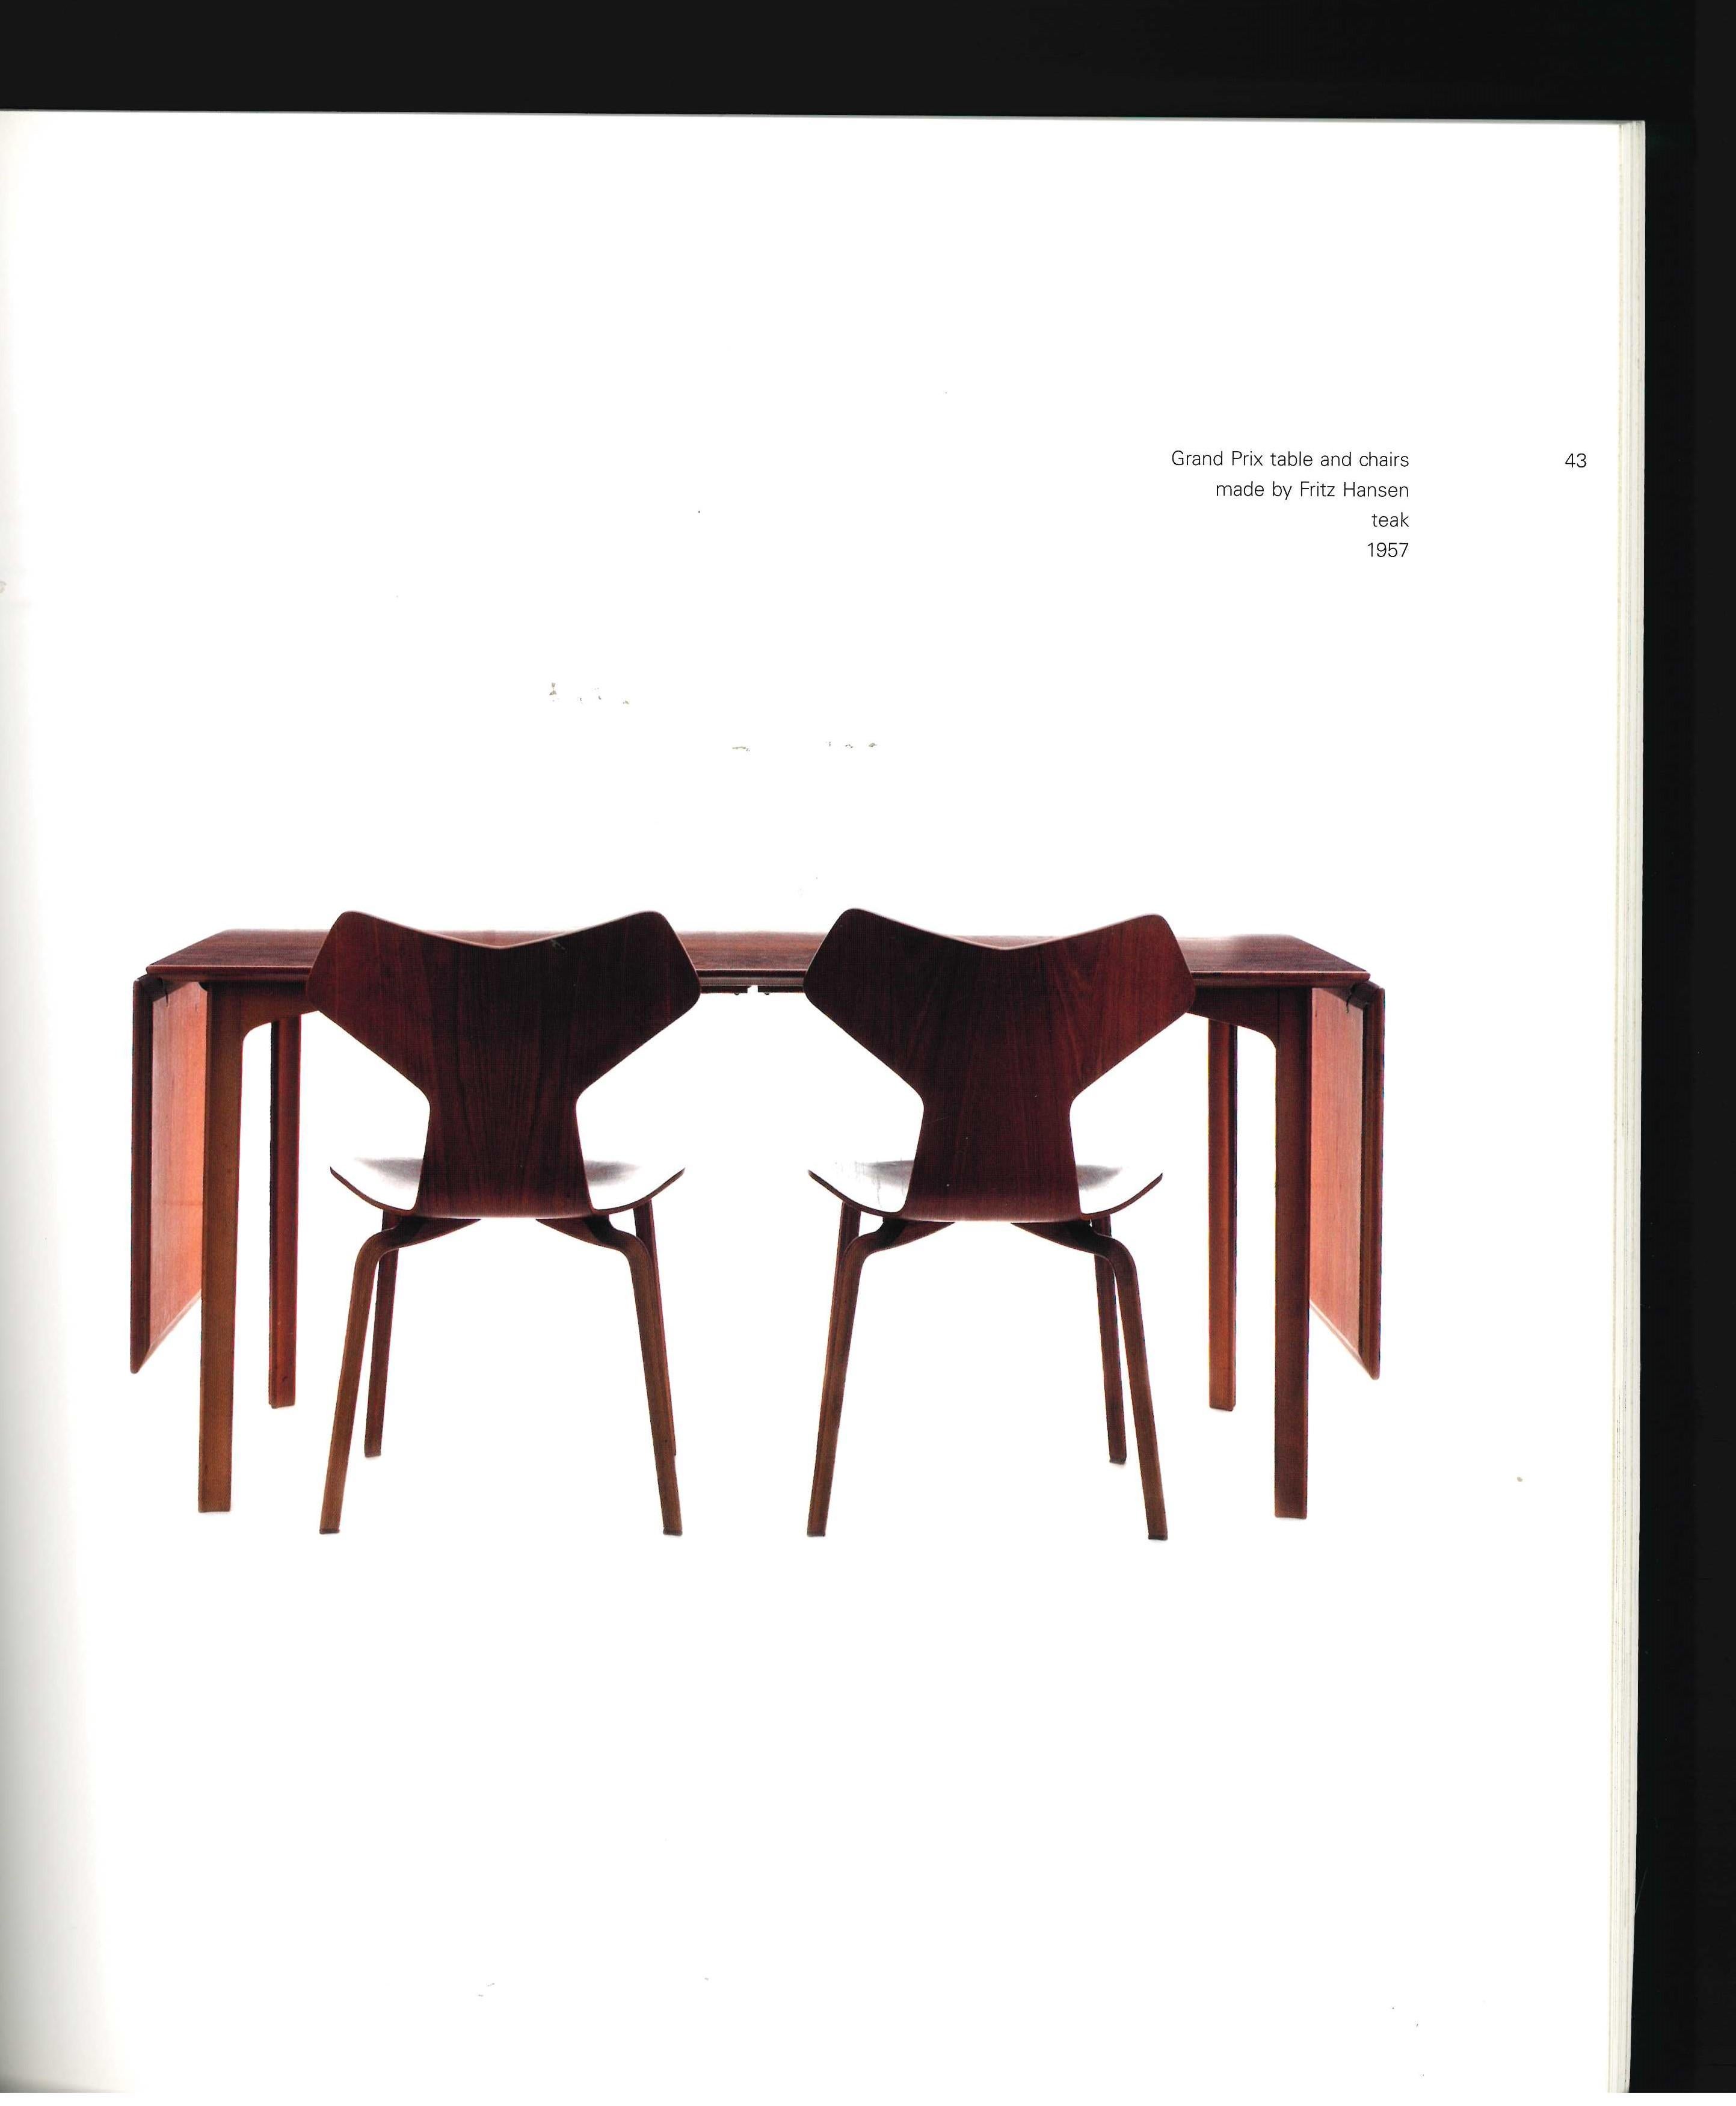 20th Century Arne Jacobsen Furniture Designs, Book